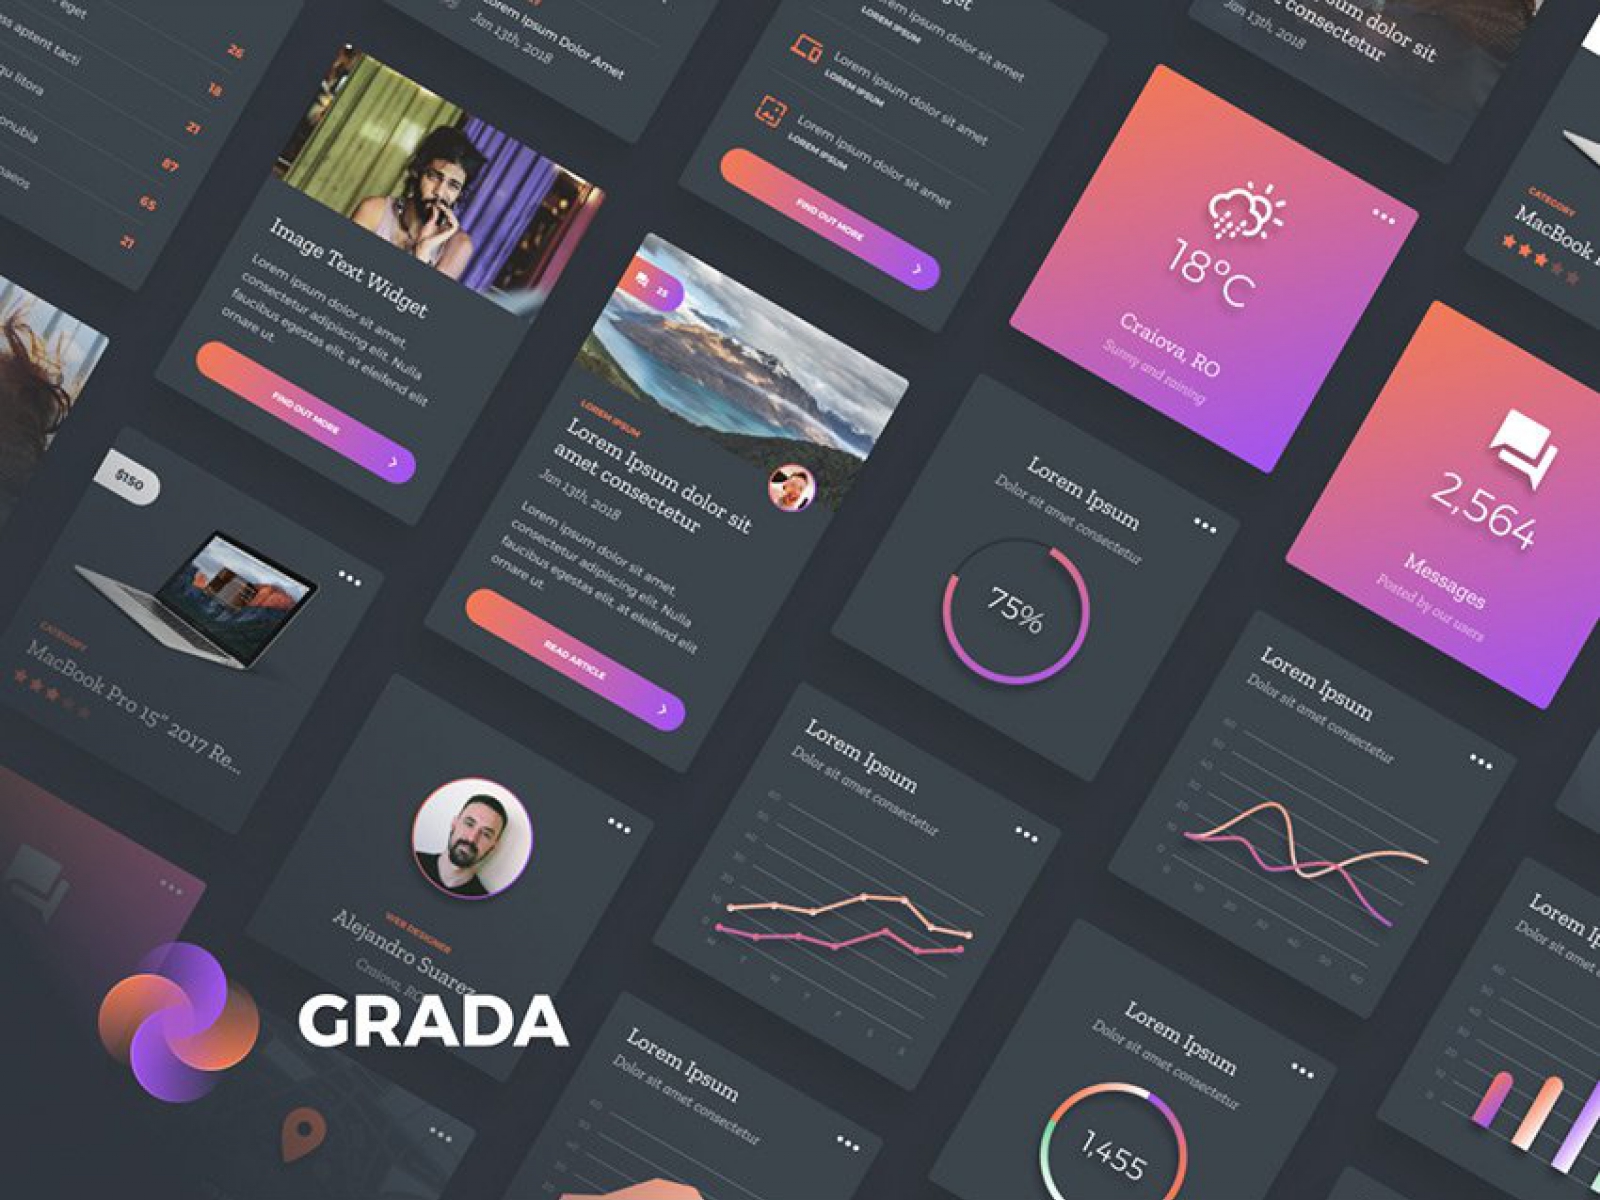 Grada Free Web Template for Figma and Adobe XD No 1